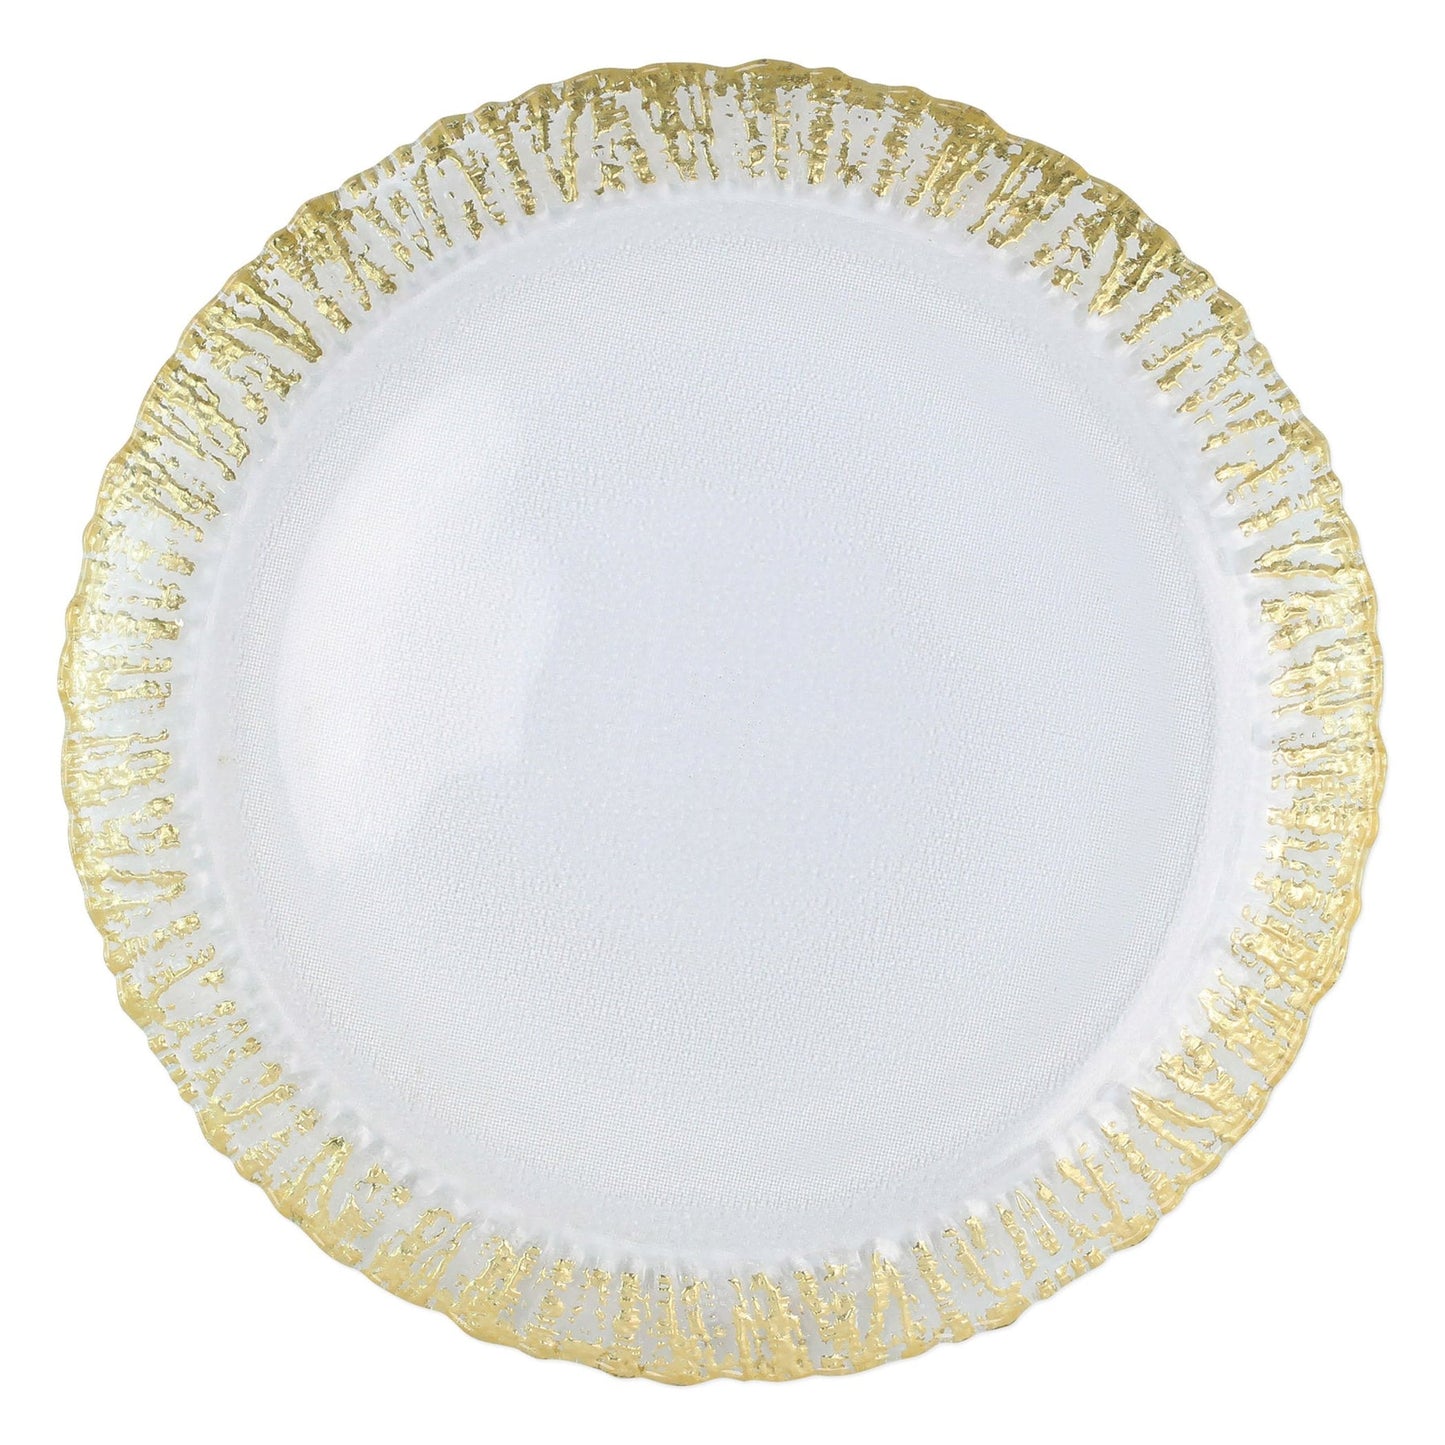 Vietri RUF-5237 Rufolo Glass Gold Round Platter